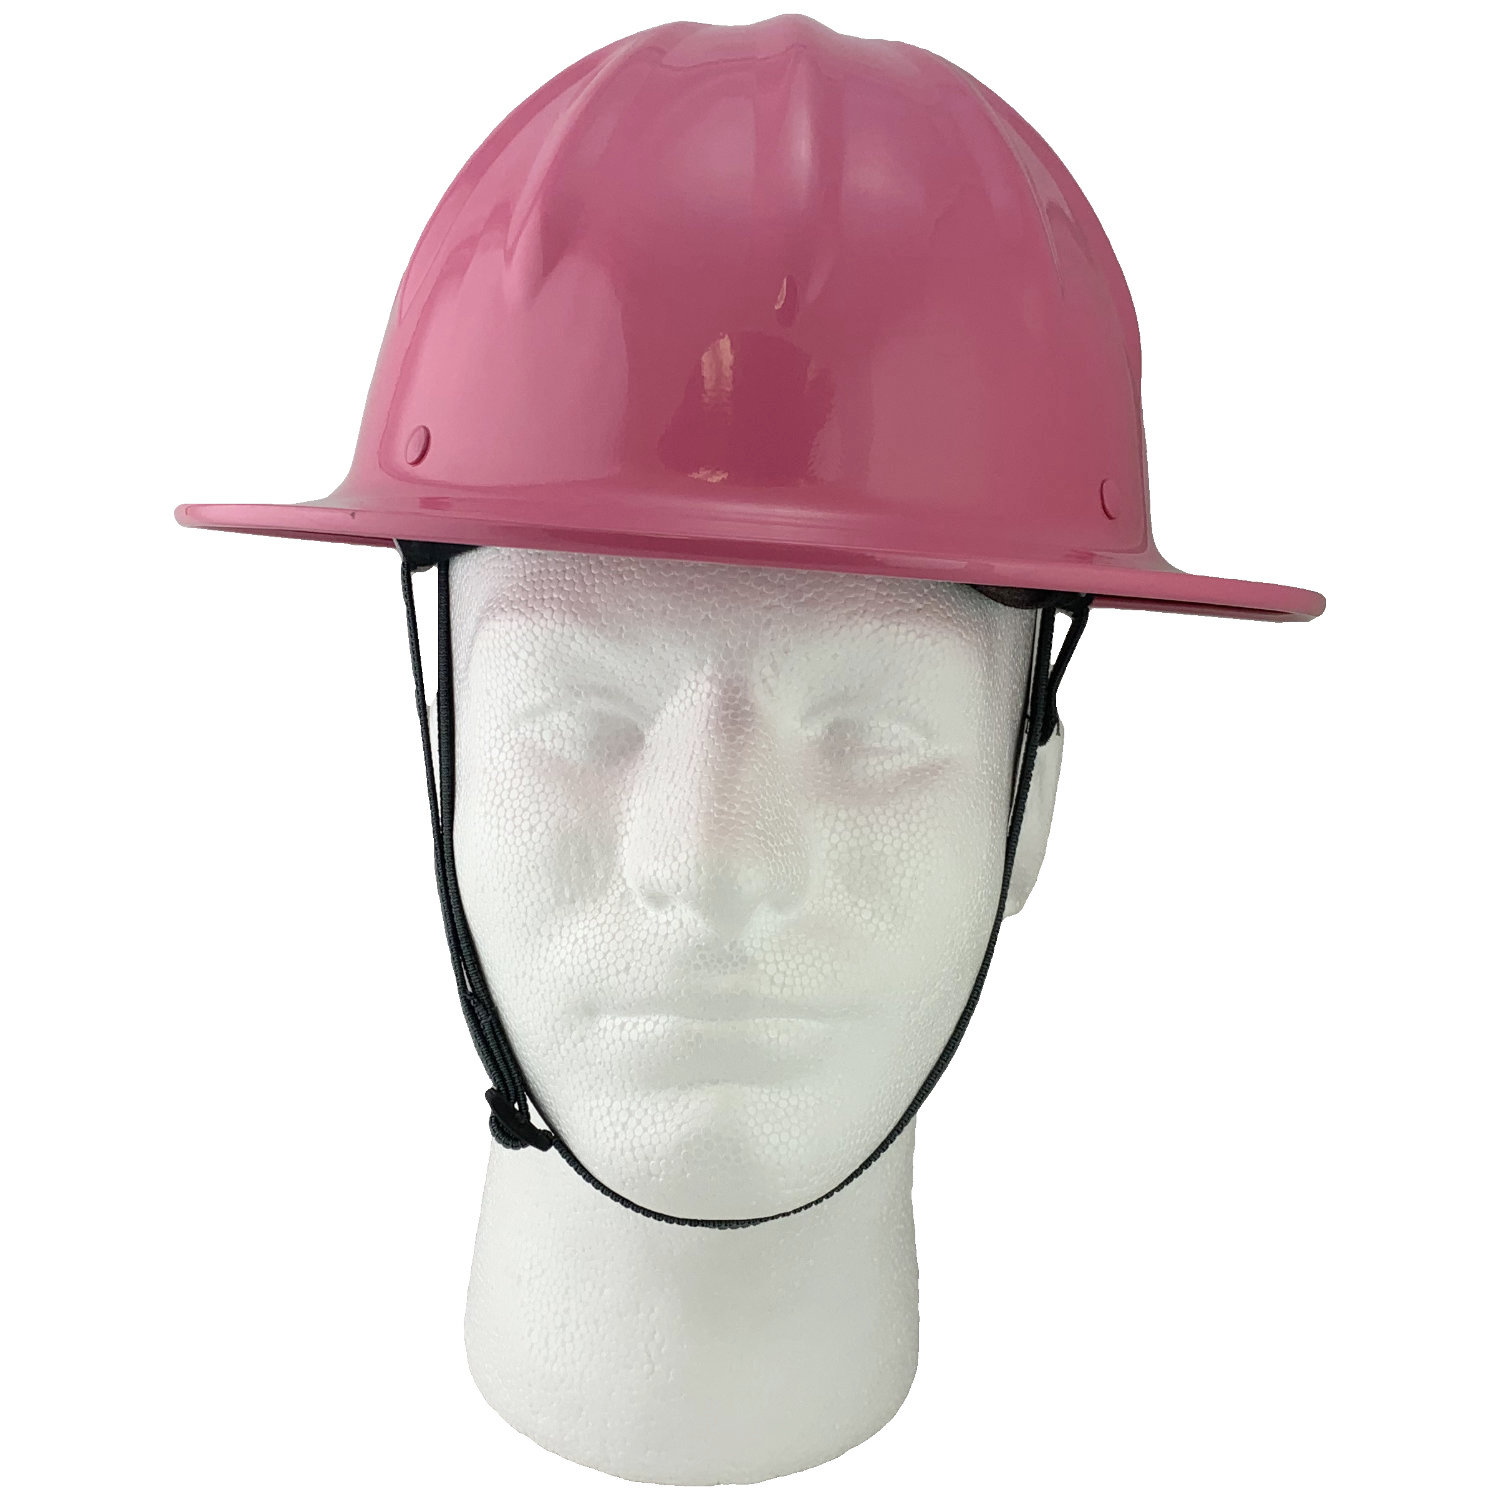 Cowboy Hardhat with Ratchet Suspension - Light Pink OSHA Approved Hard Hat